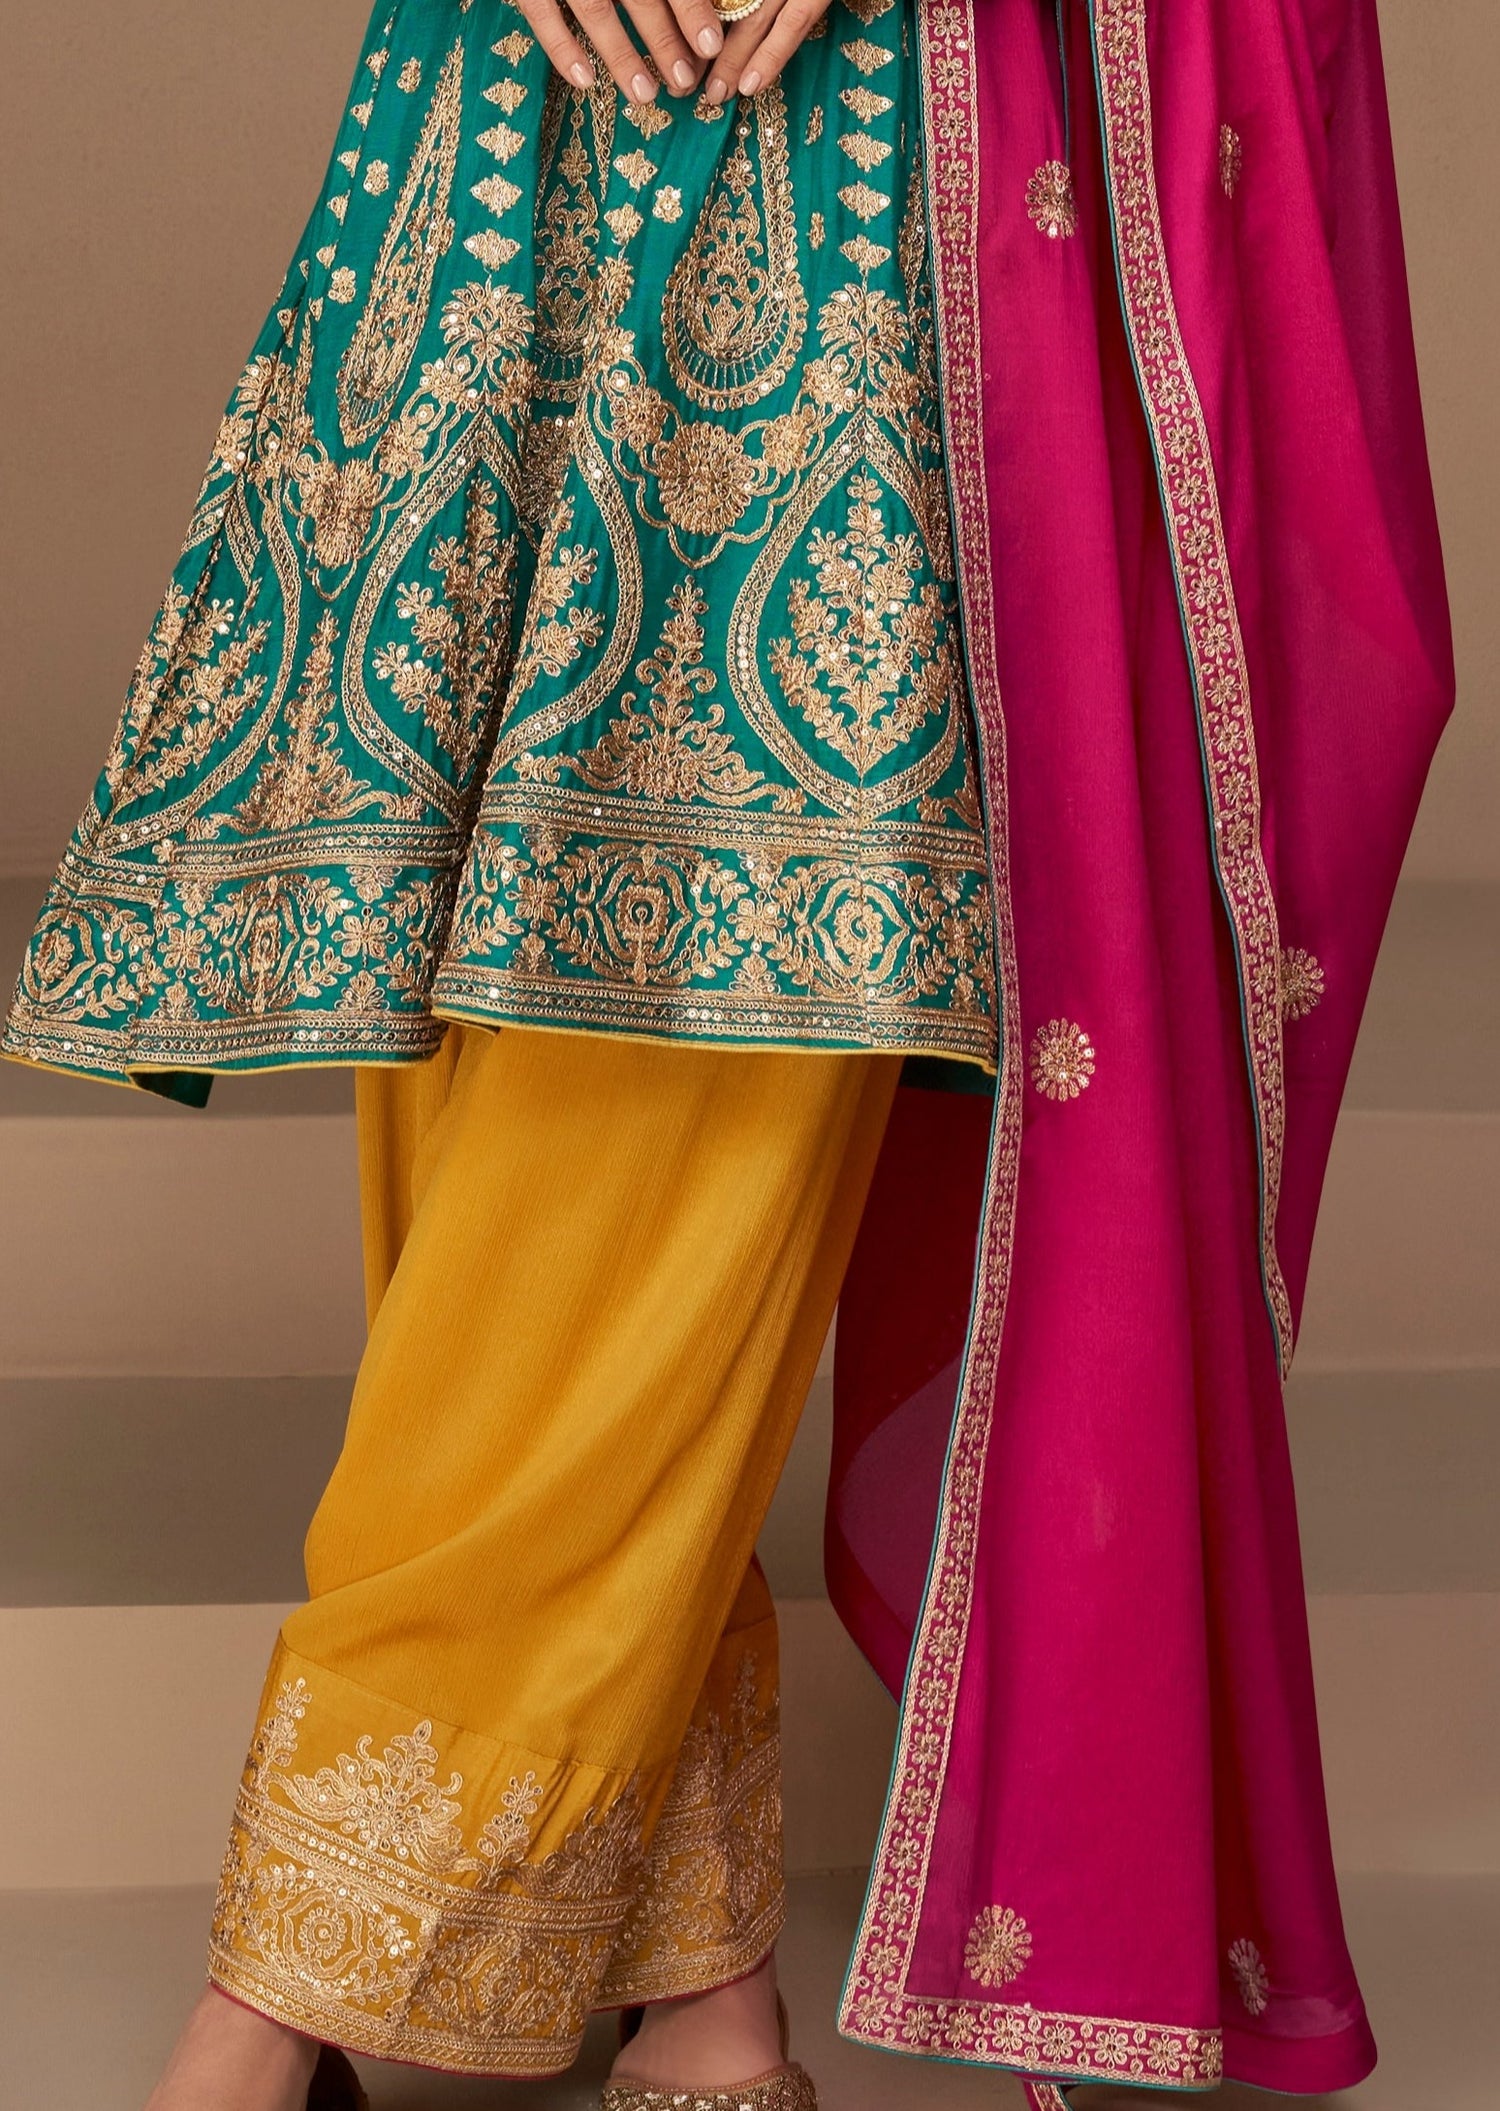 Firozi Blue Anarkali suit close up design with Yellow salwar